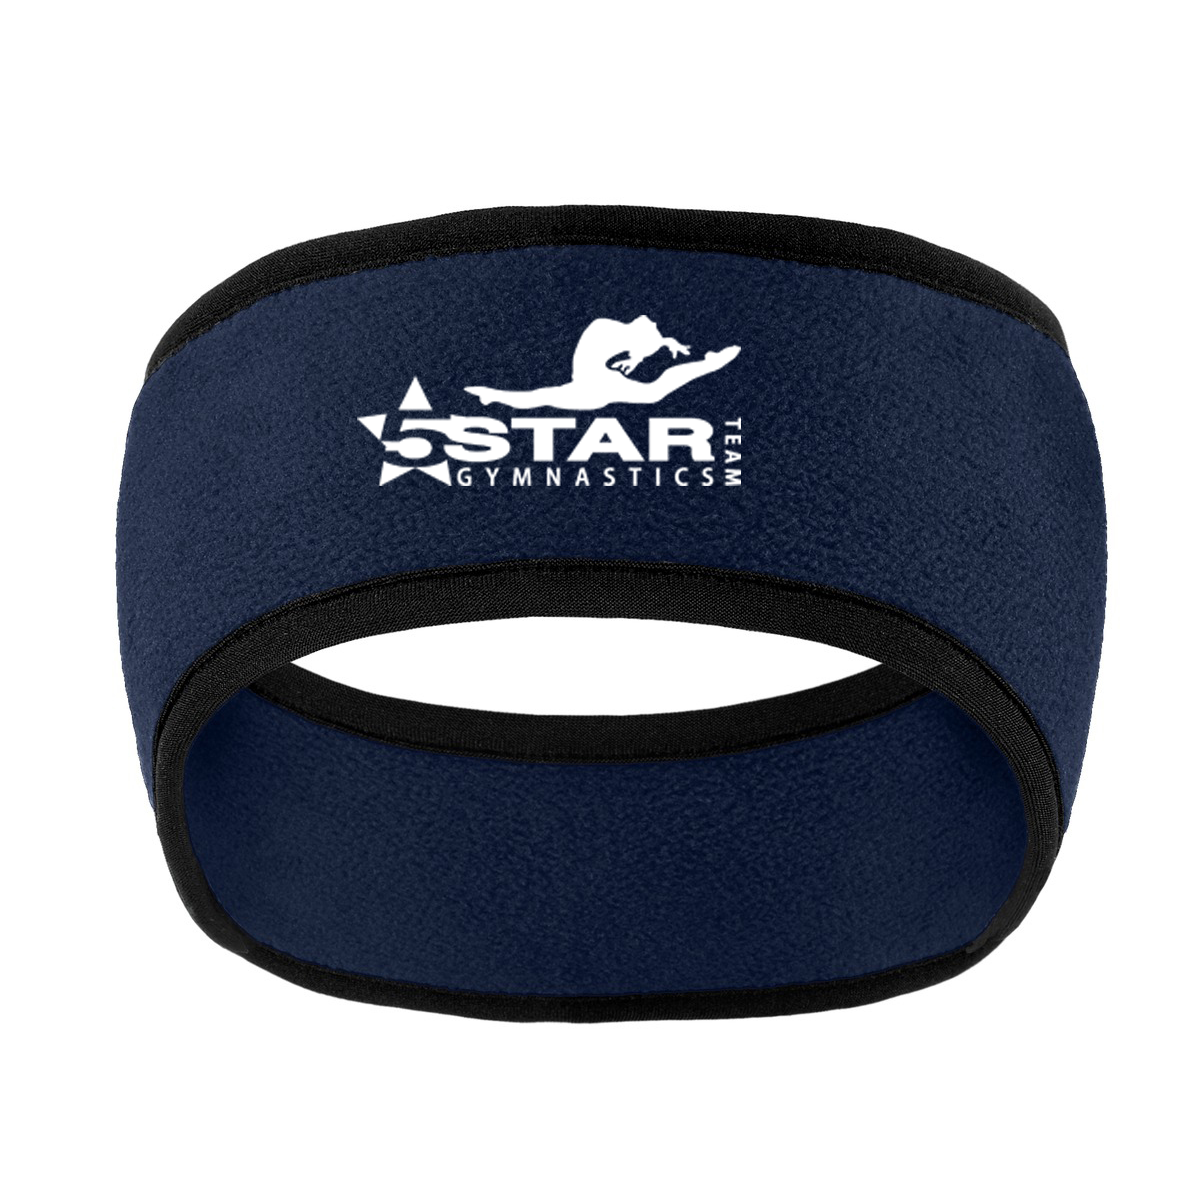 5 Star Gymnastics Two-Color Fleece Headband